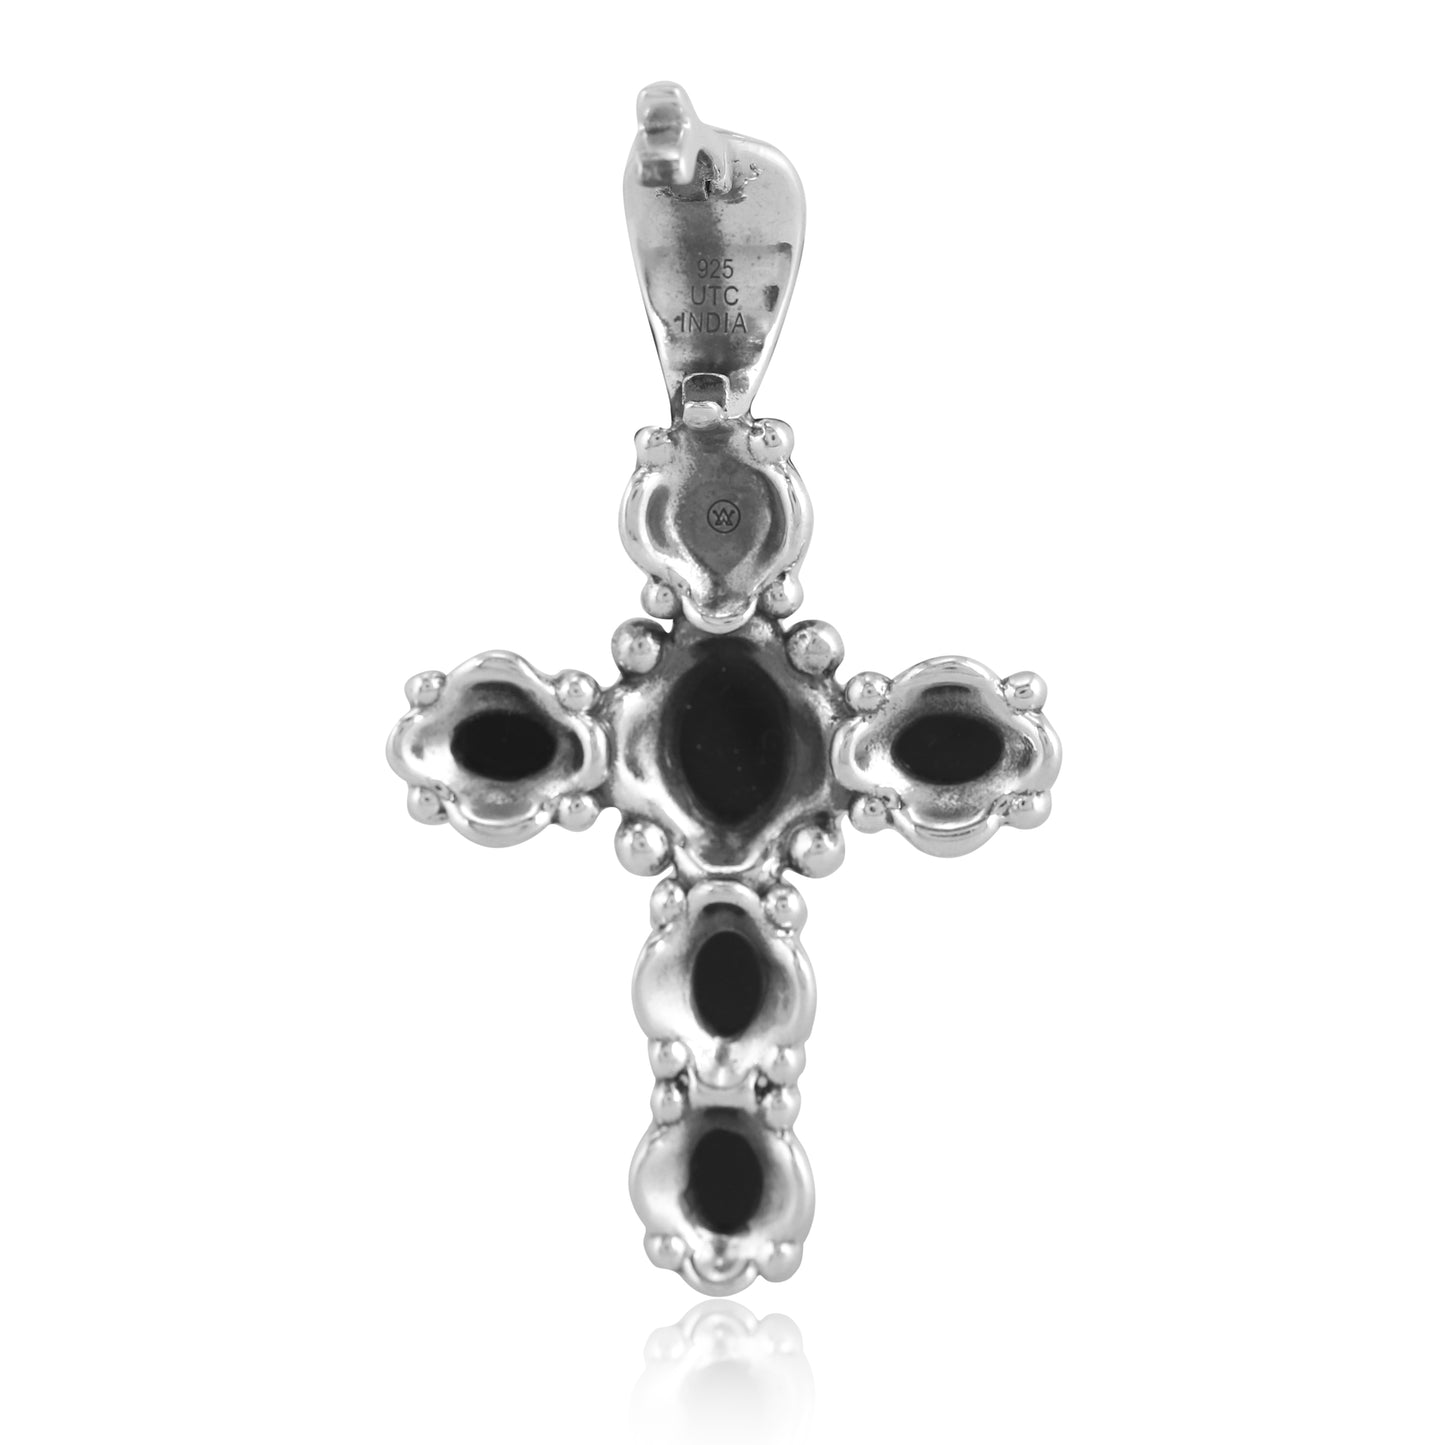 Sterling Silver with Black Agate Gemstone Cross Design Women's Pendant Enhancer